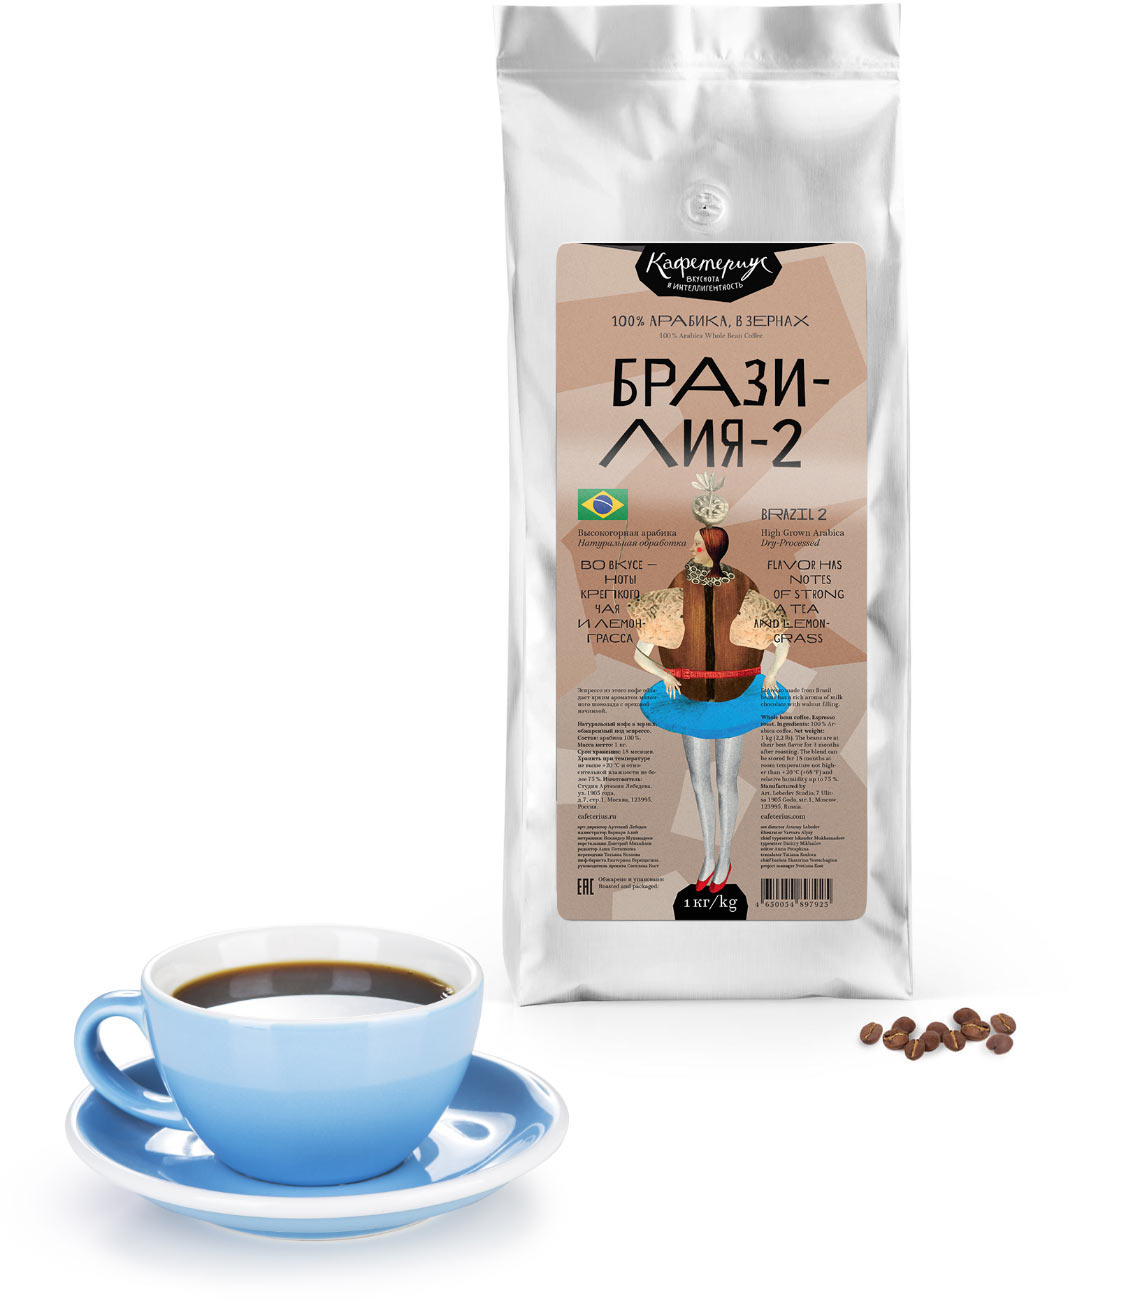 Brazil-2 single-origin coffee